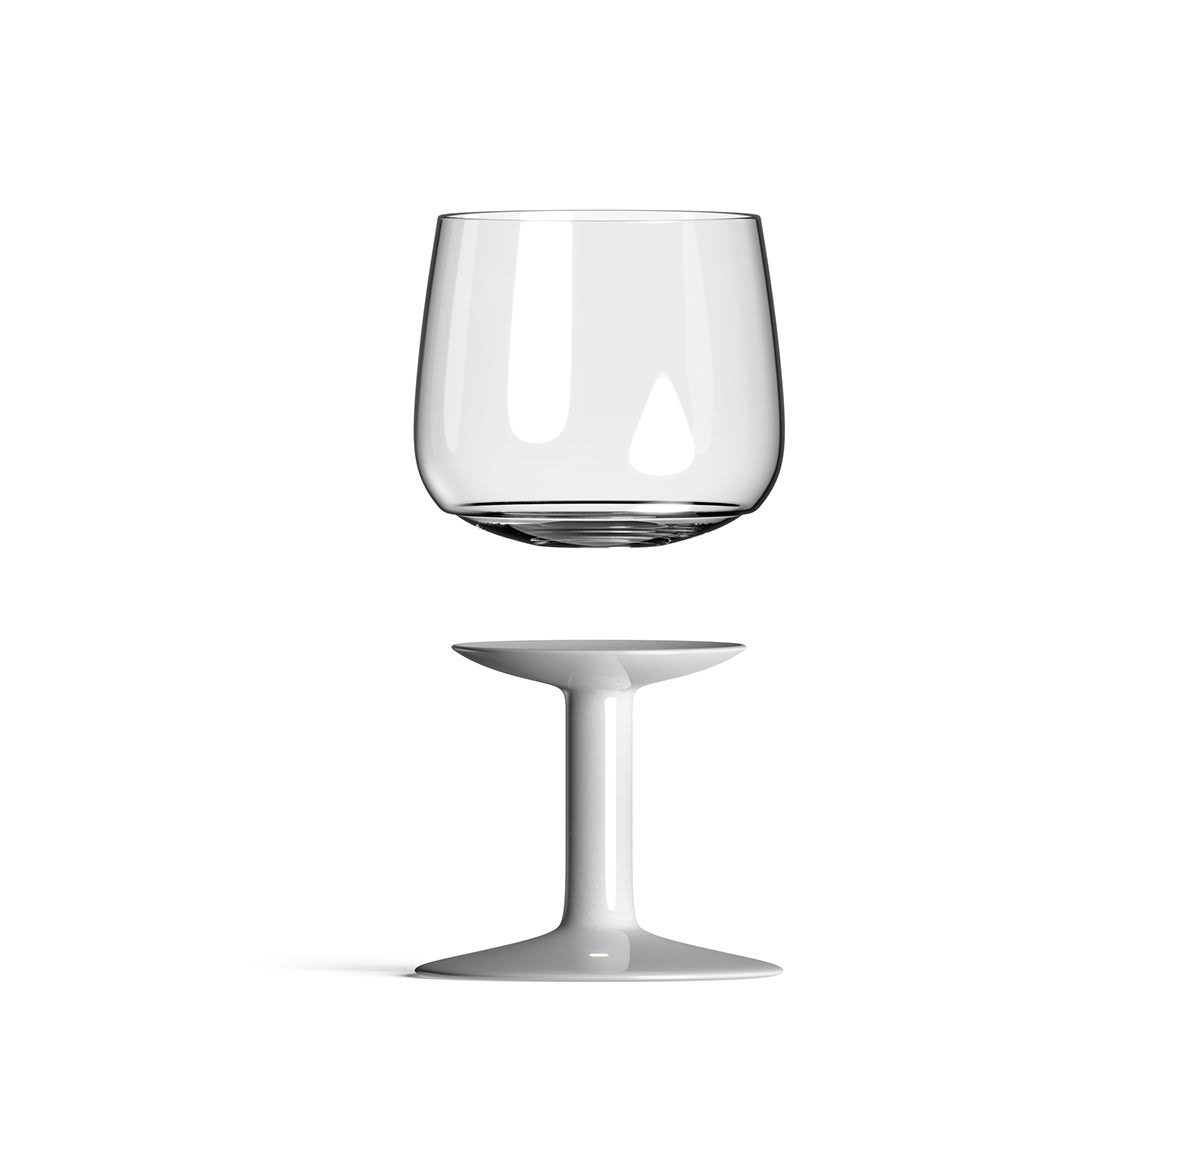 alcohol bottle ceramic glass industrial design  product design  vino wine